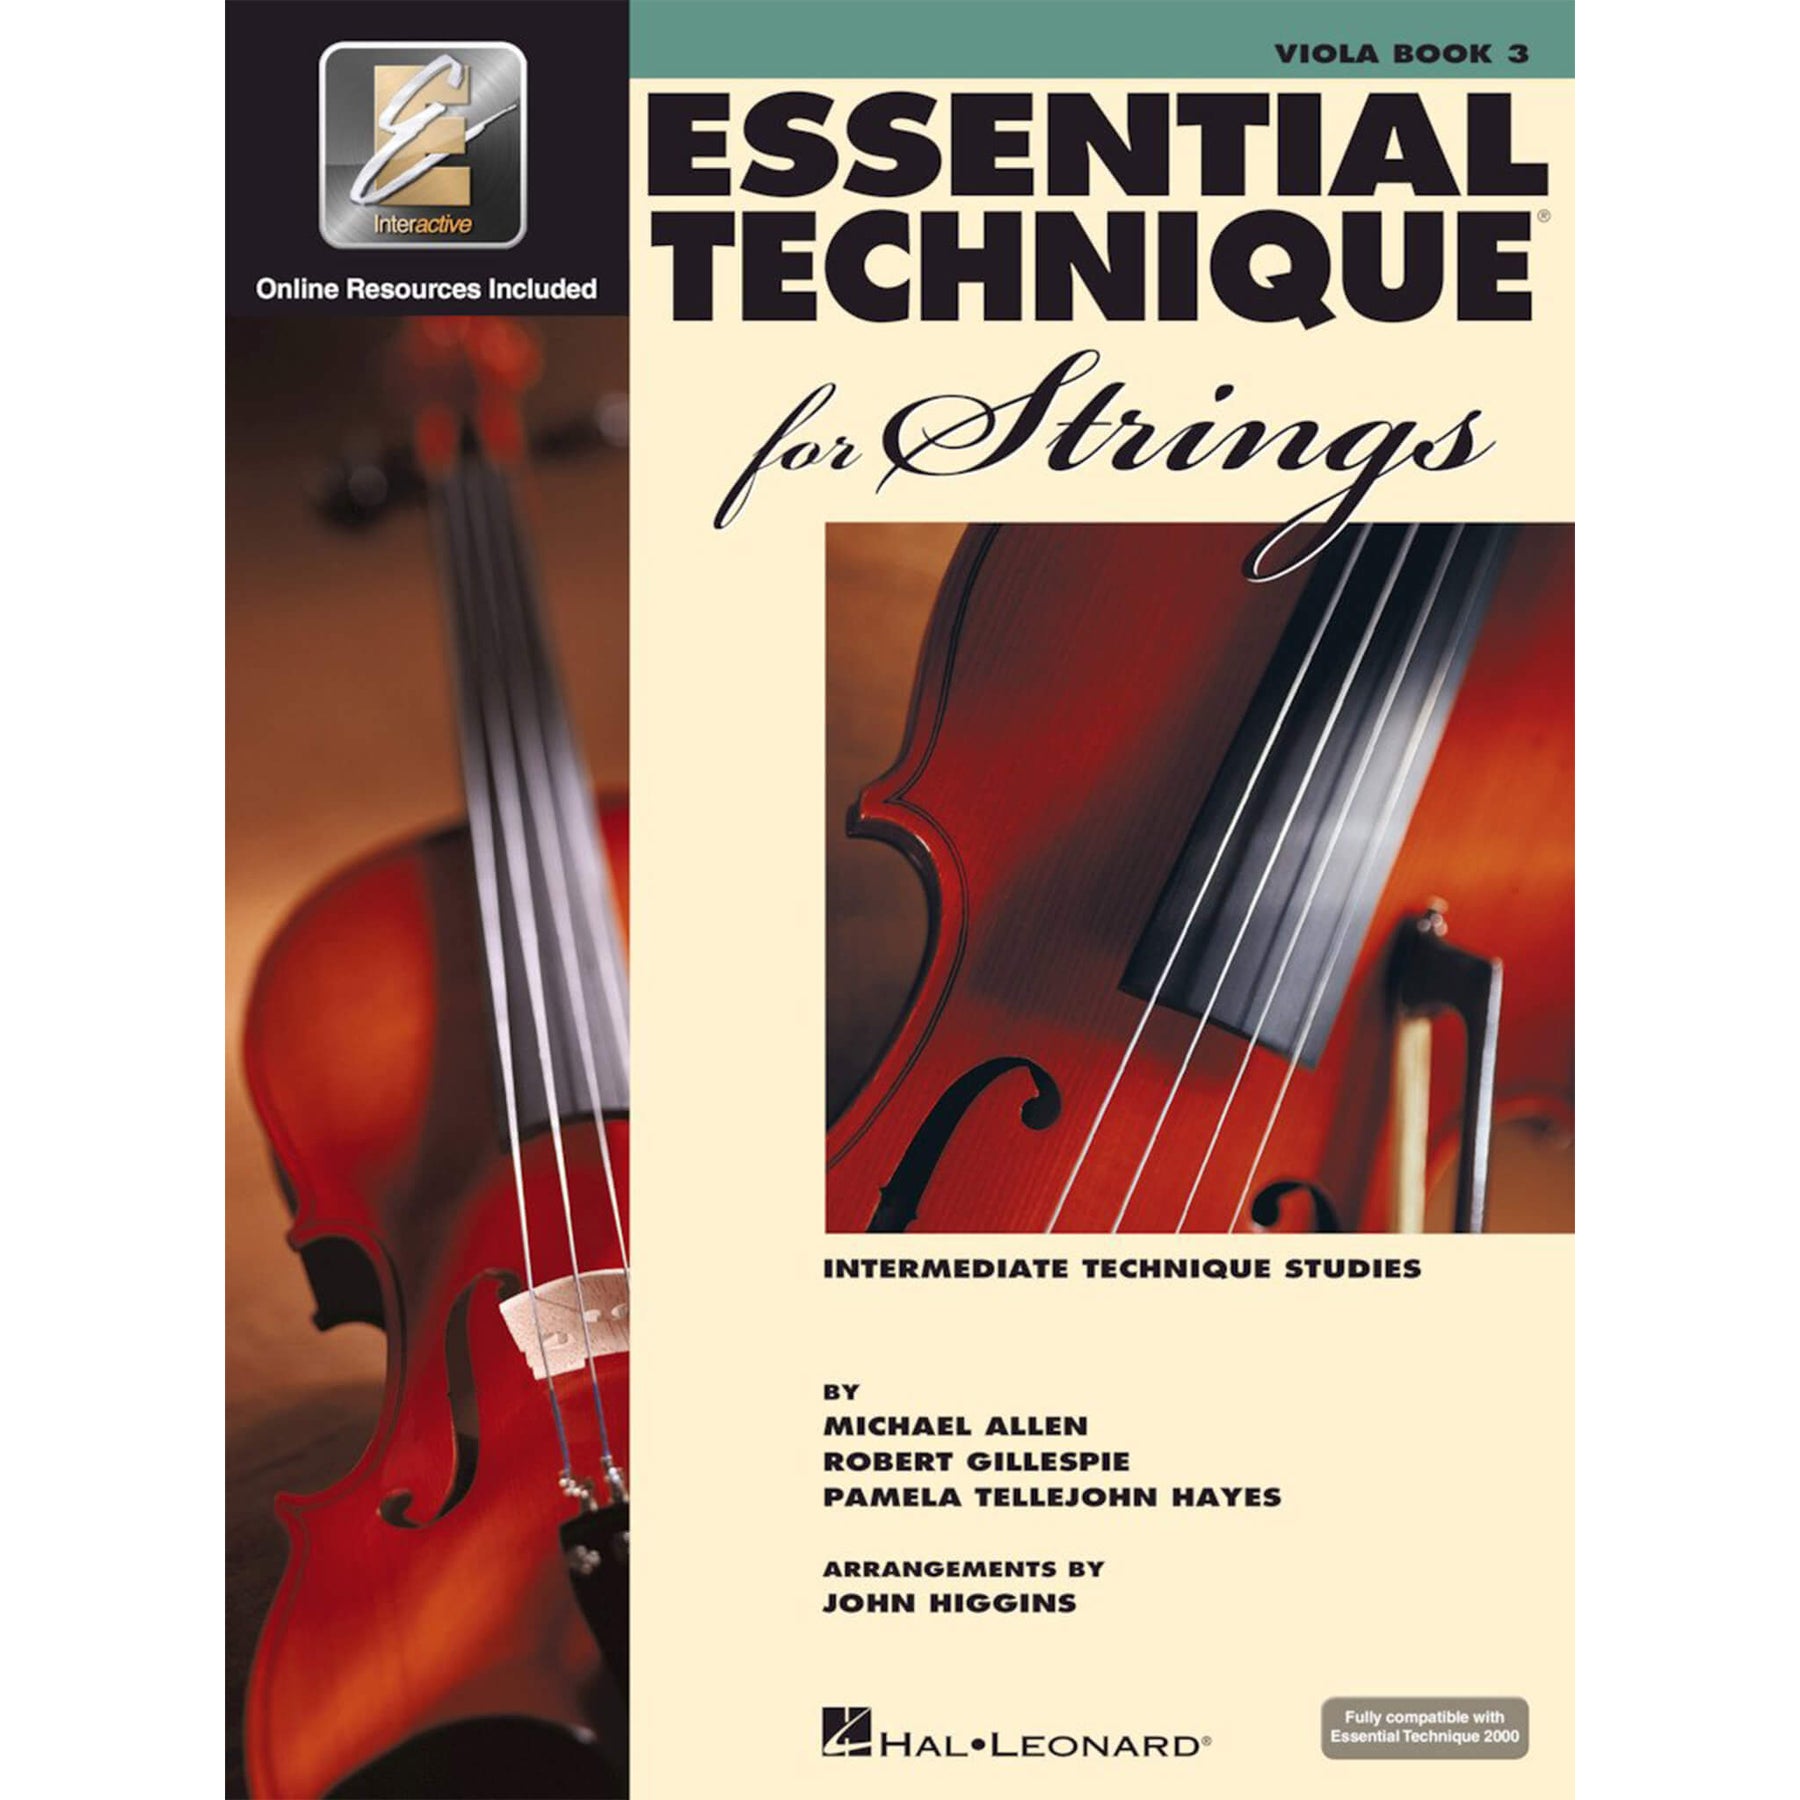 Essential Technique for Strings, Viola Book 3